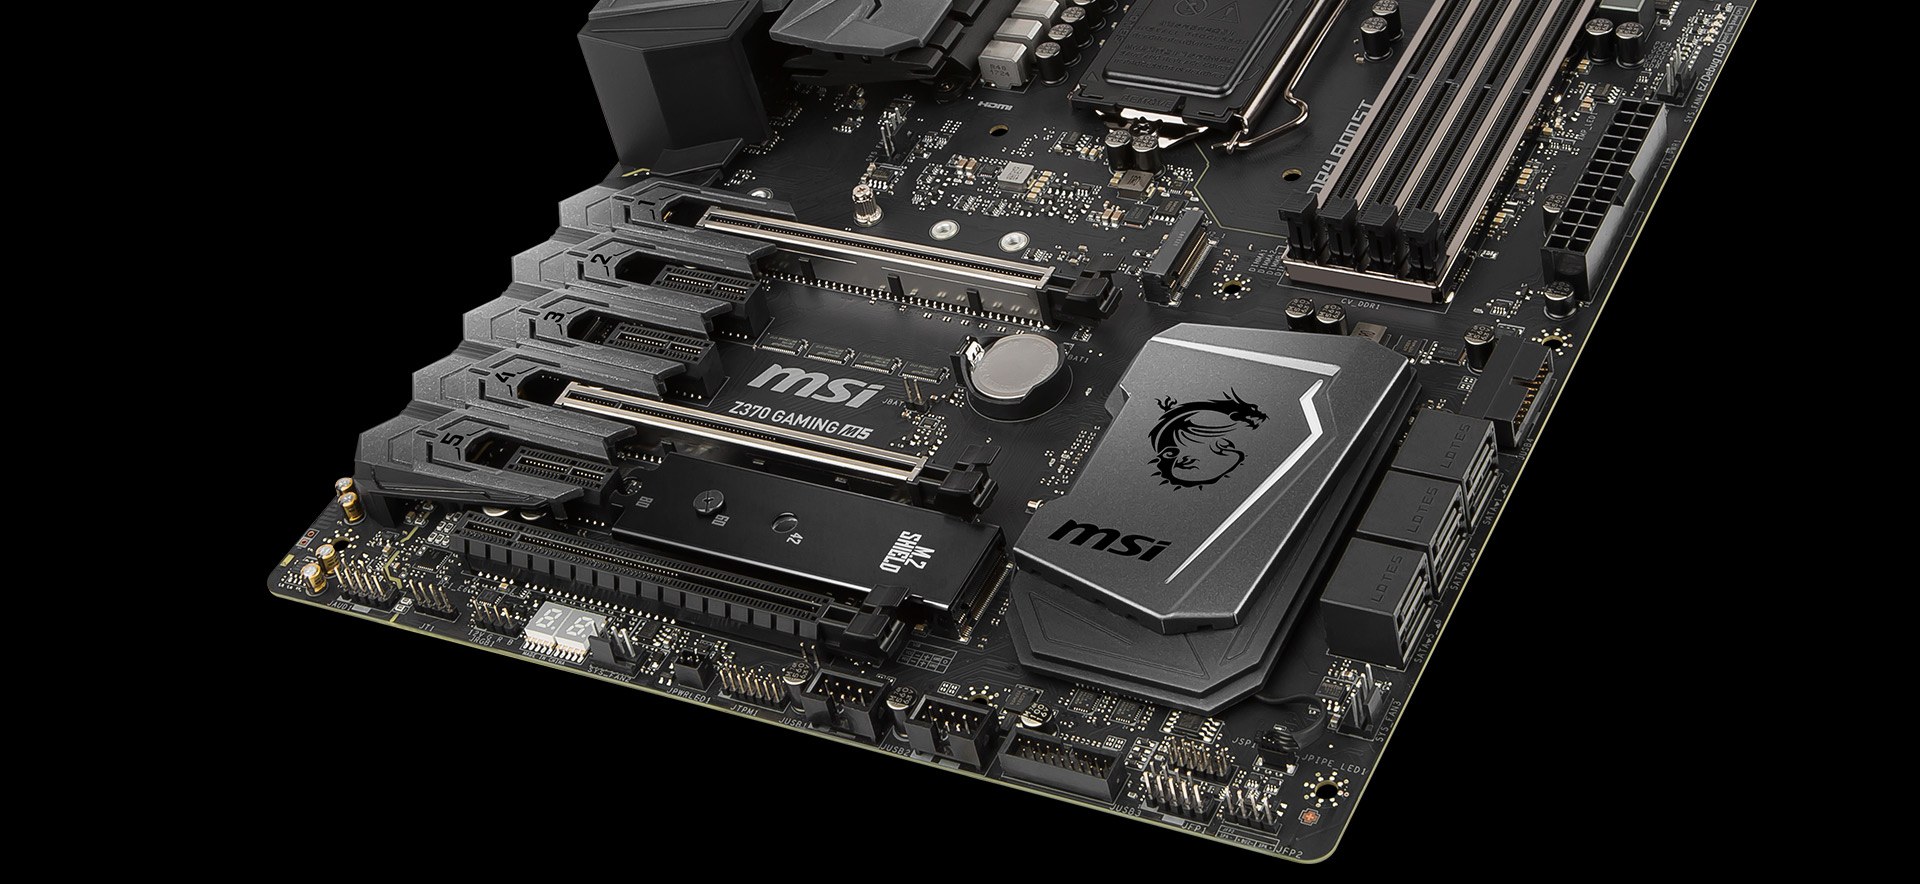 MSI Z370 GAMING M5 Enthusiast Intel Coffee Lake LGA 1151 Gaming Motherboard